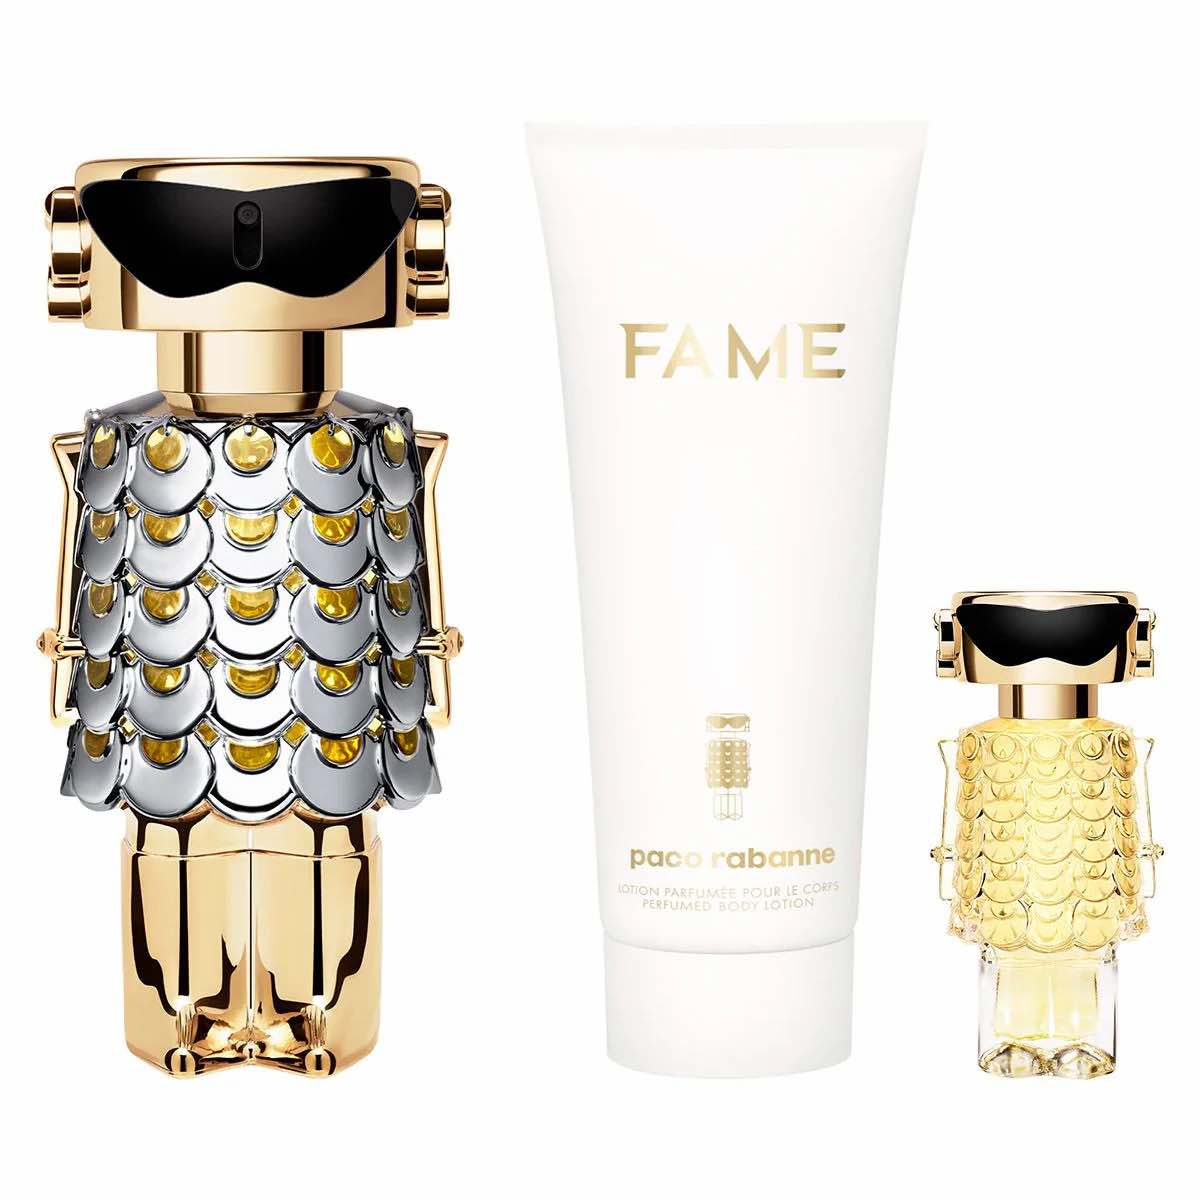 Fame Paco Rabanne para mujer / SET - RECARGABLE - 80 ml Eau De Parfum Spray